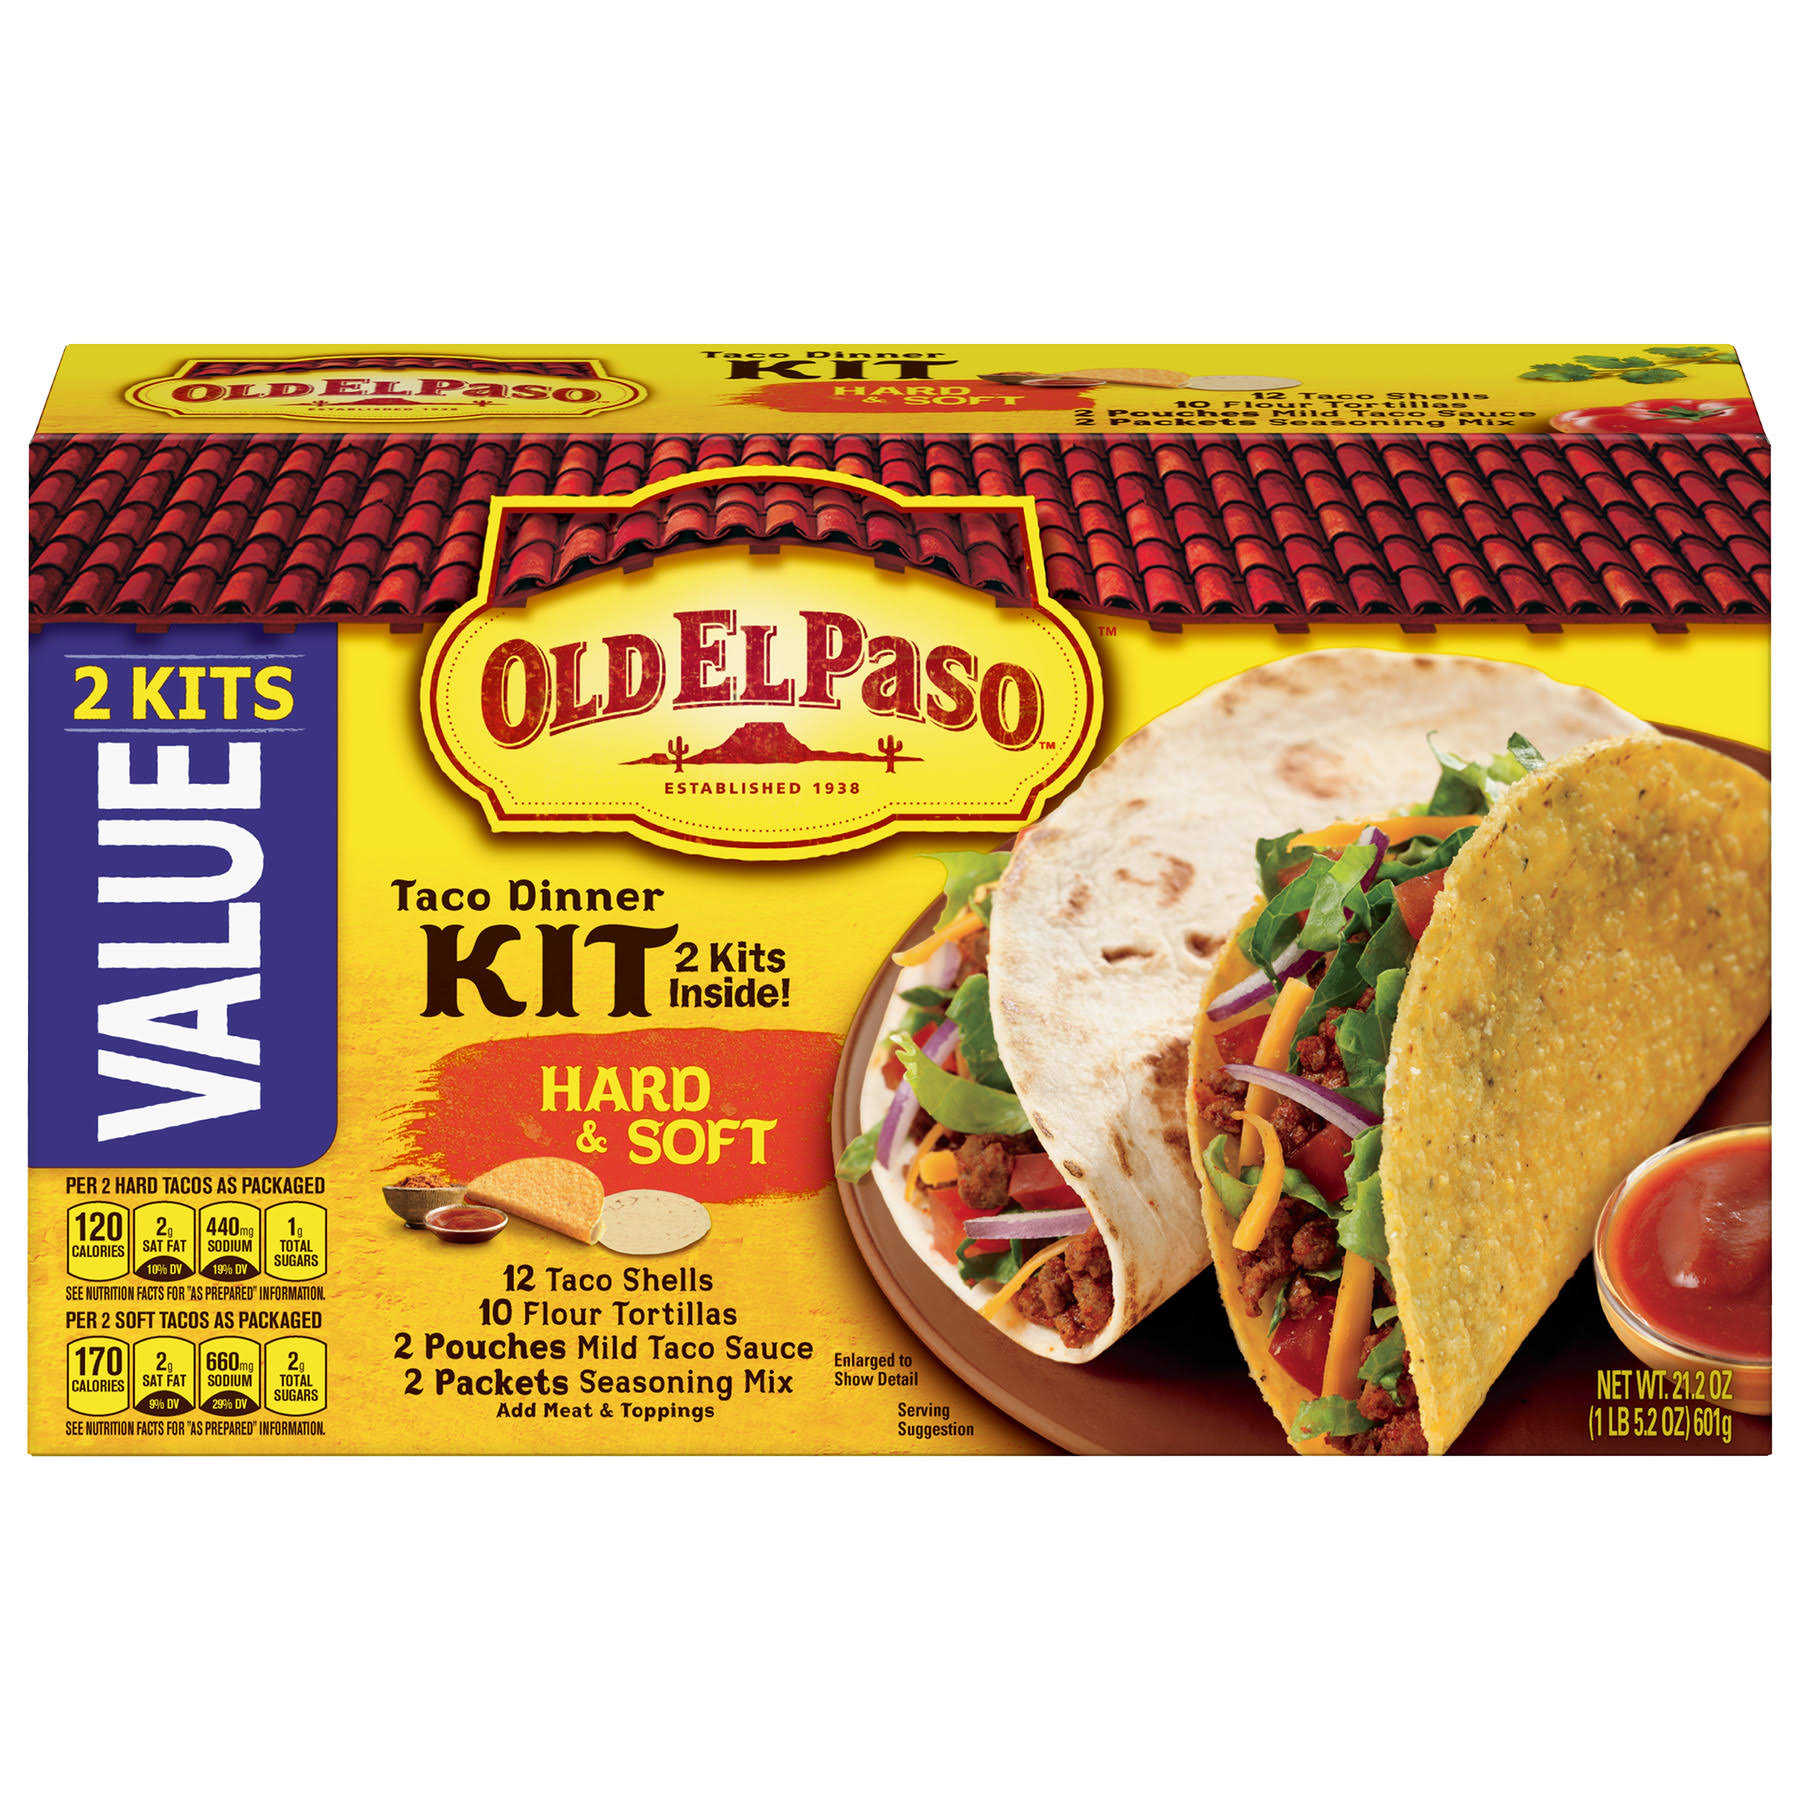 Old El Paso Taco Dinner Kit, Hard & Soft, Family Size - 2 kits, 21.2 oz